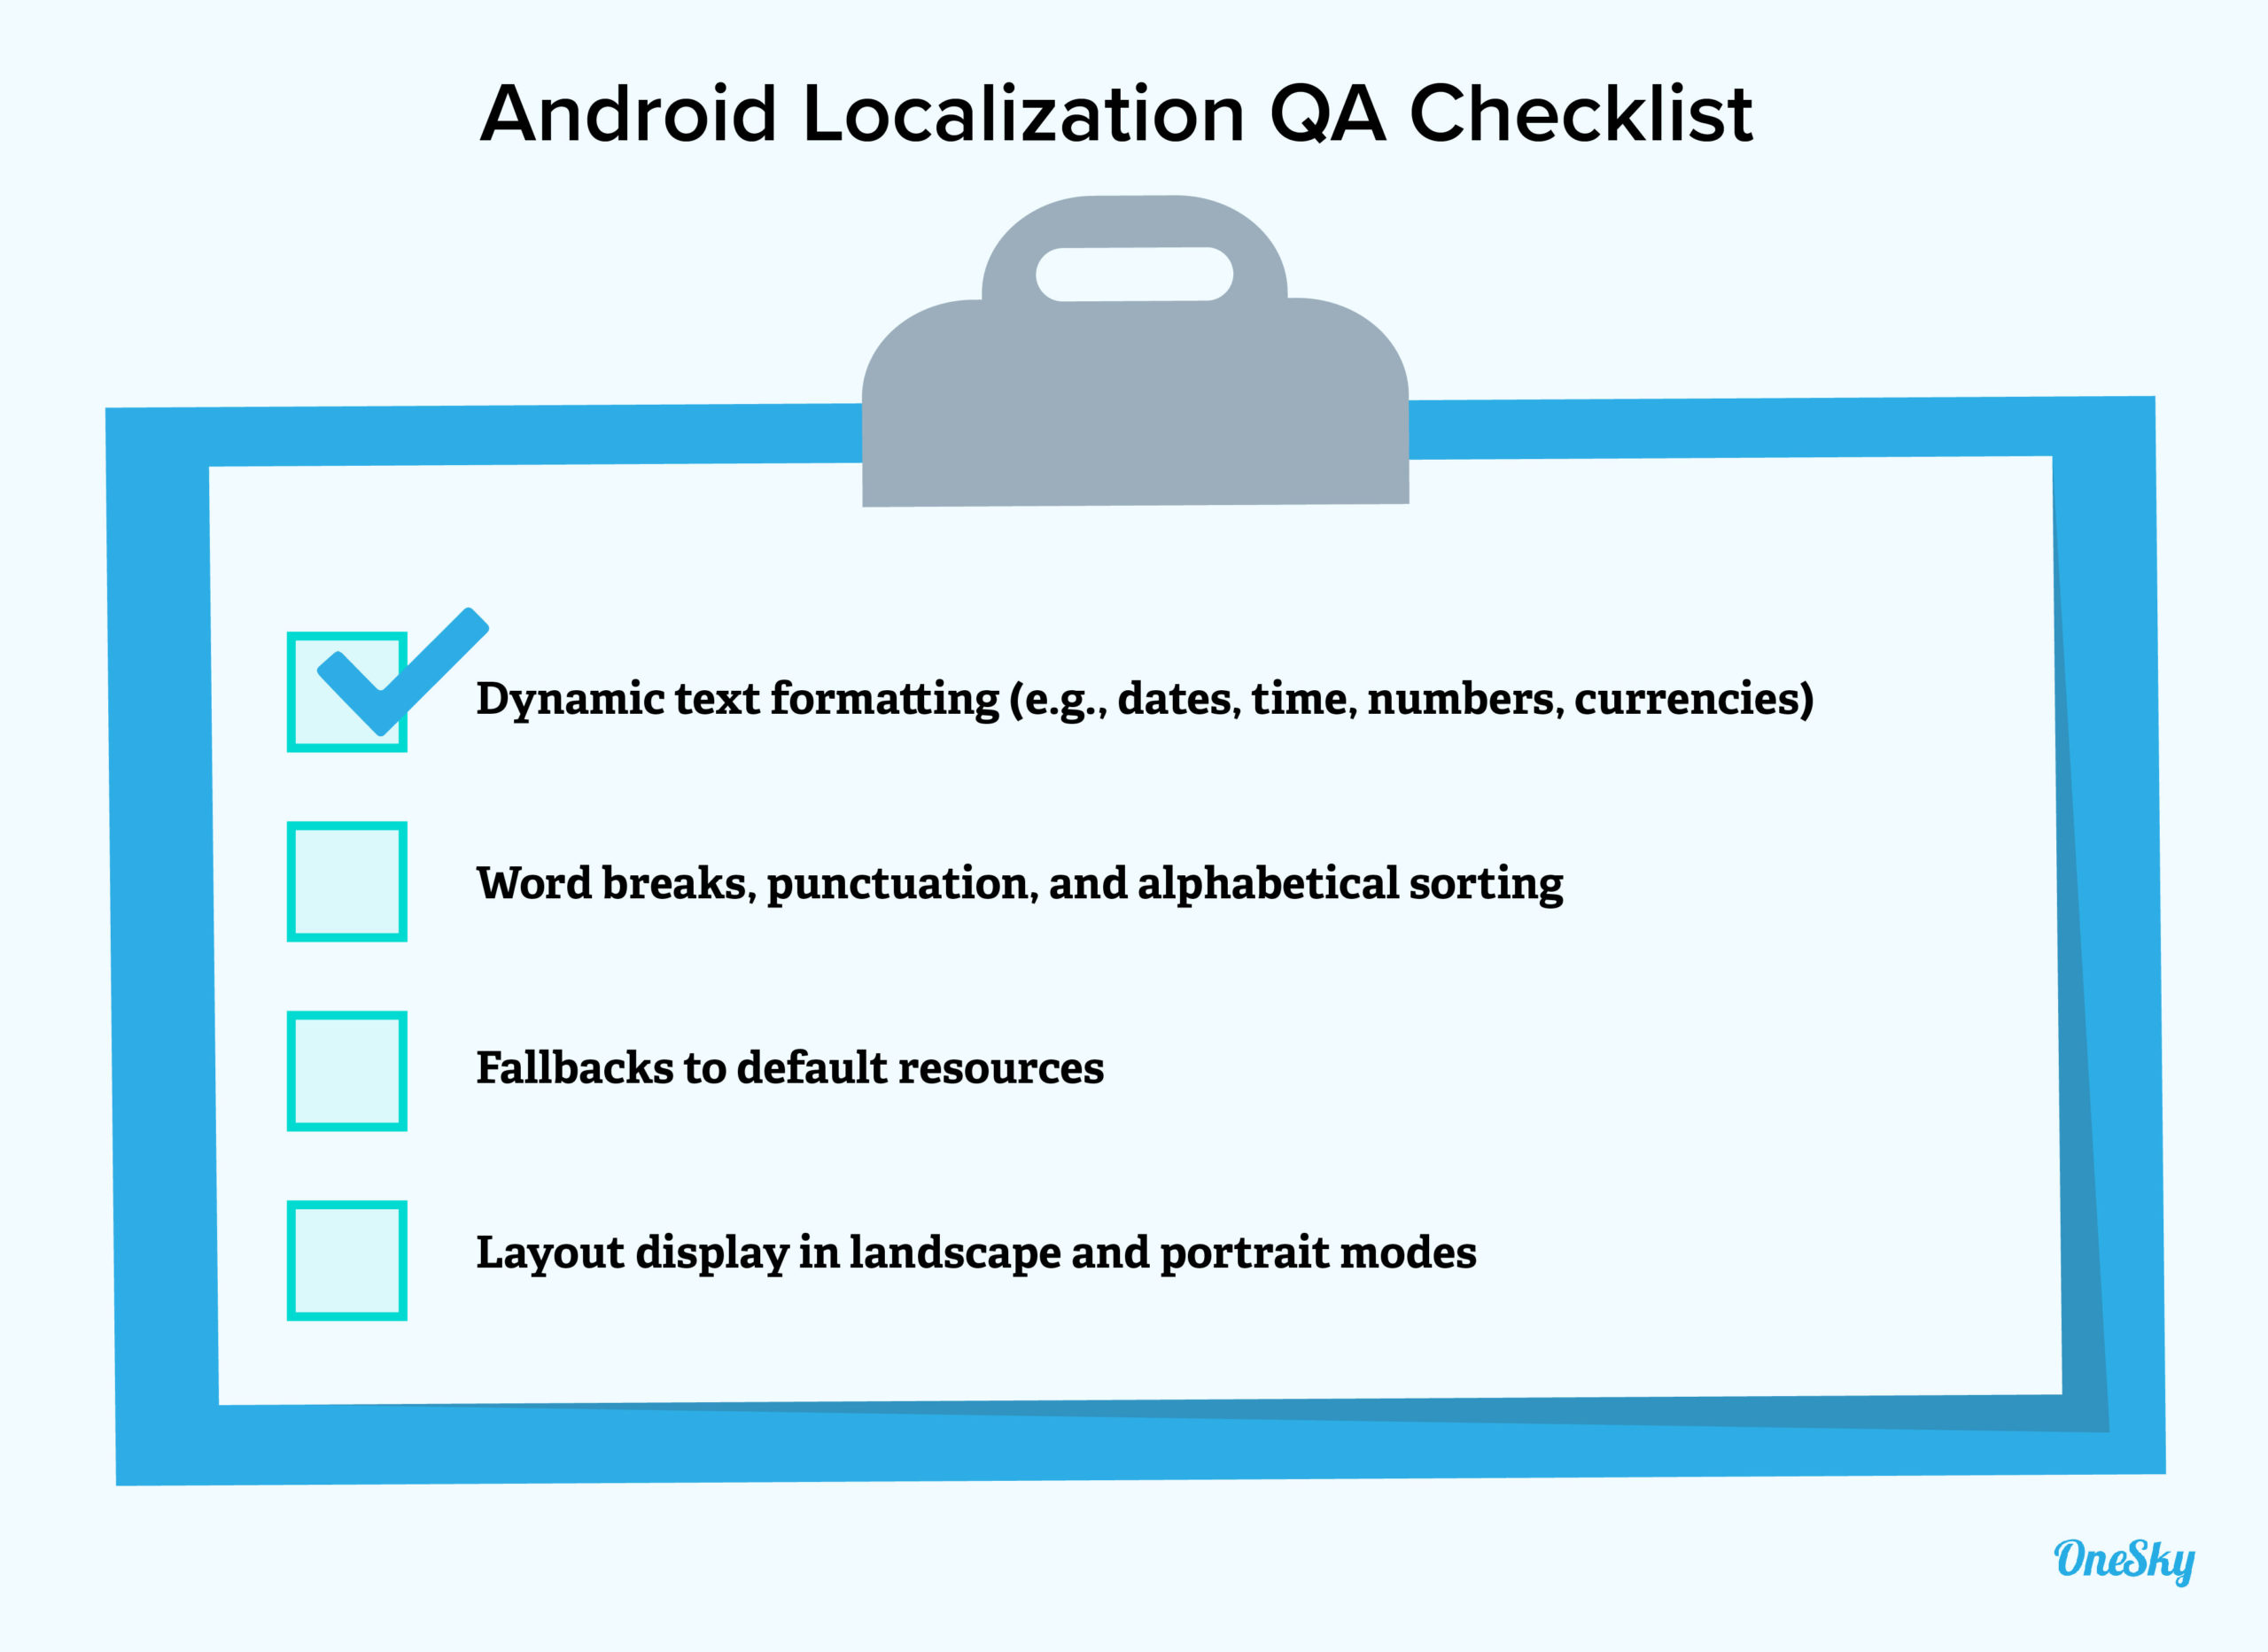 Android Localization Checklist